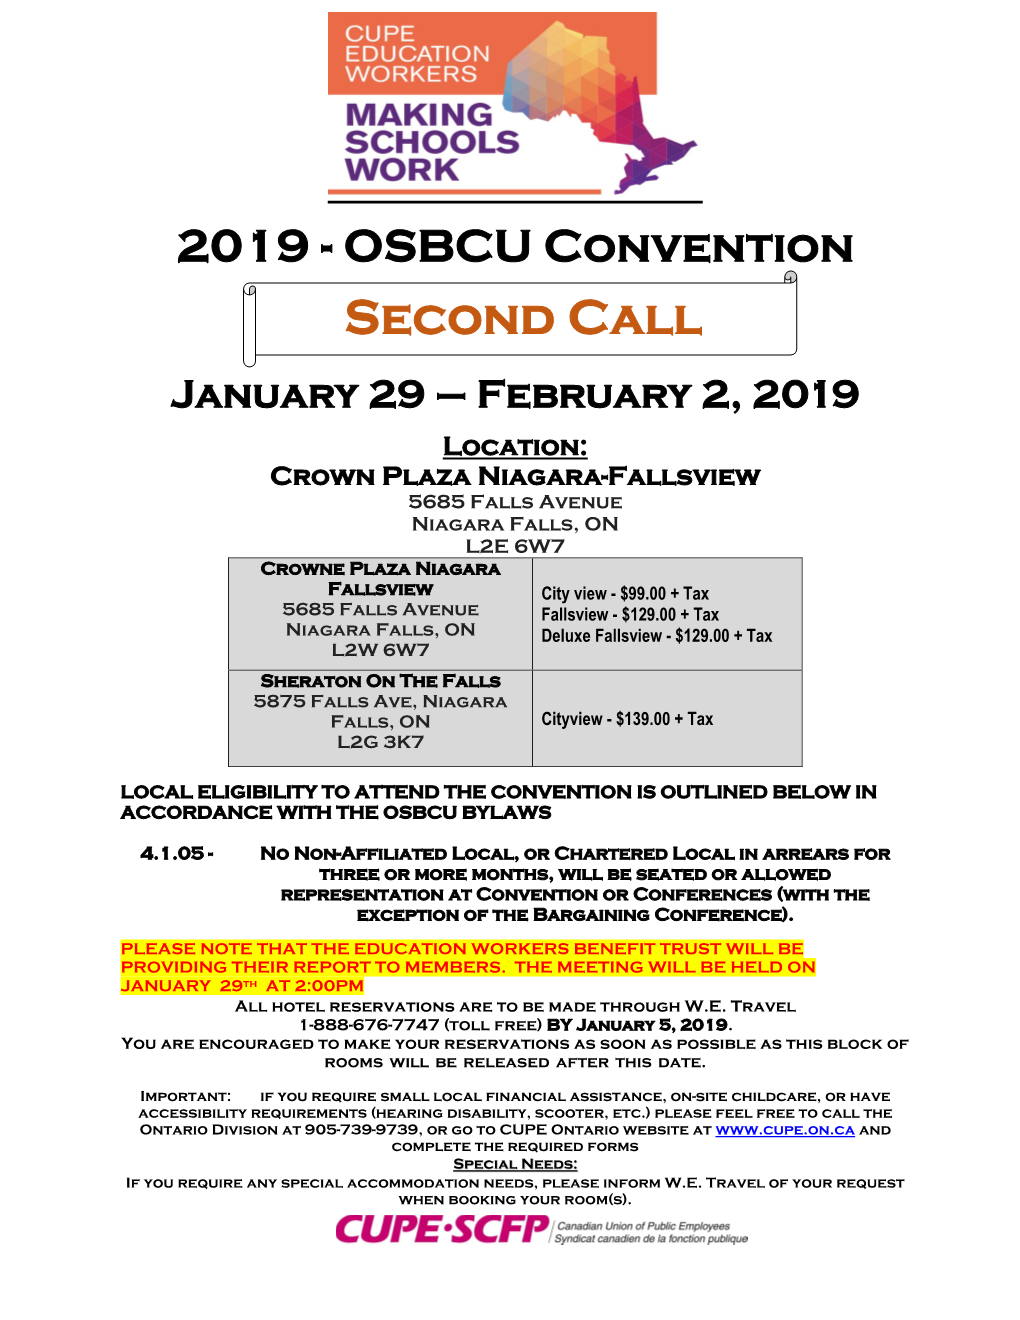 Second Call – OSBCU Convention 2019